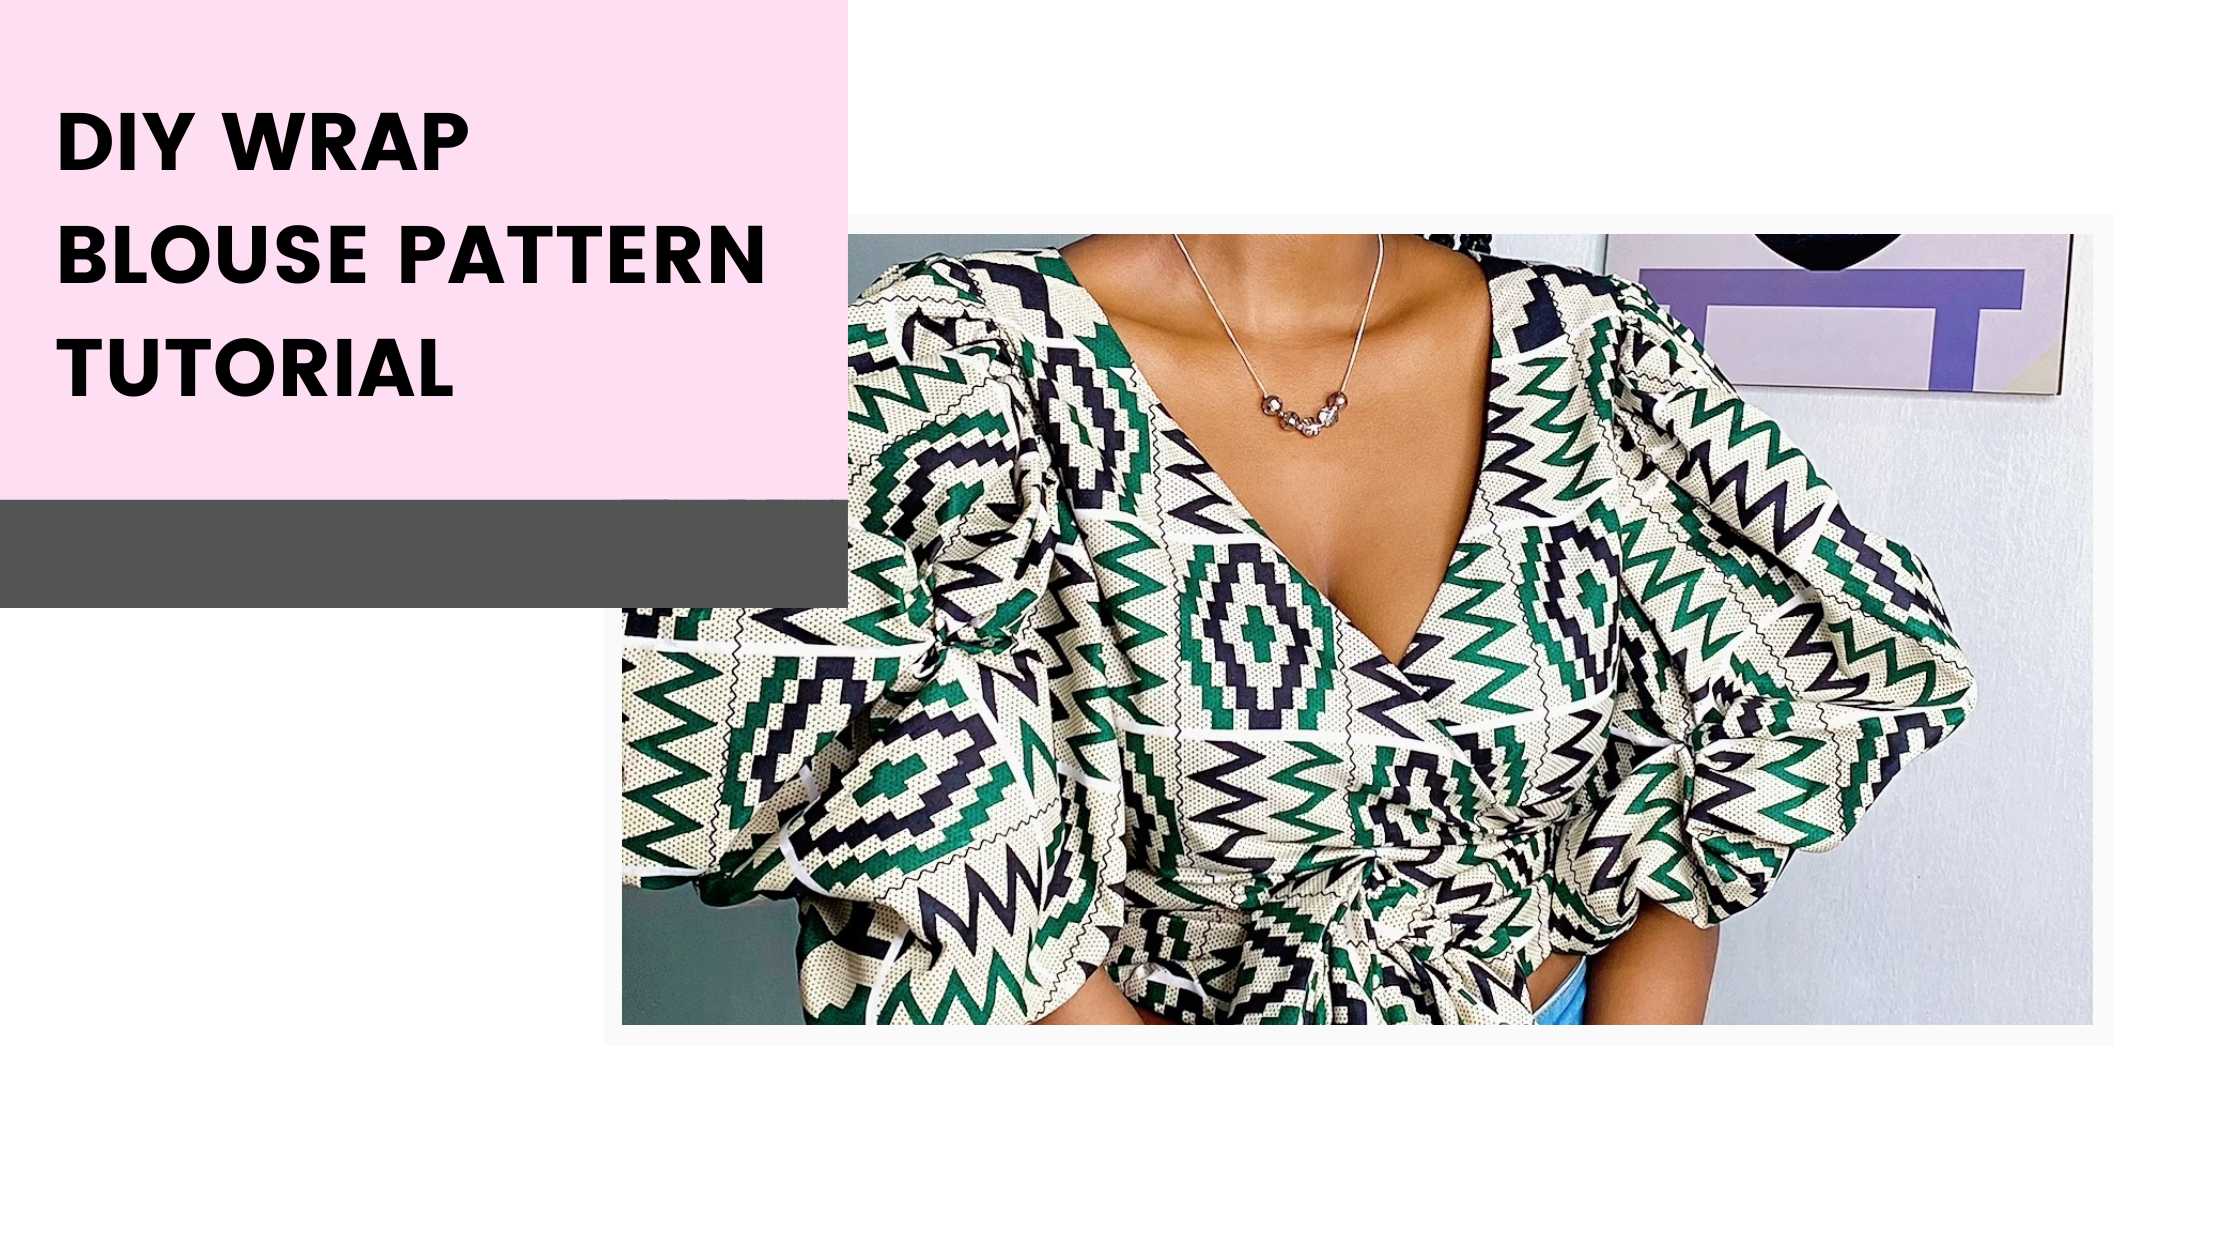 Wrap blouse pattern tutorial